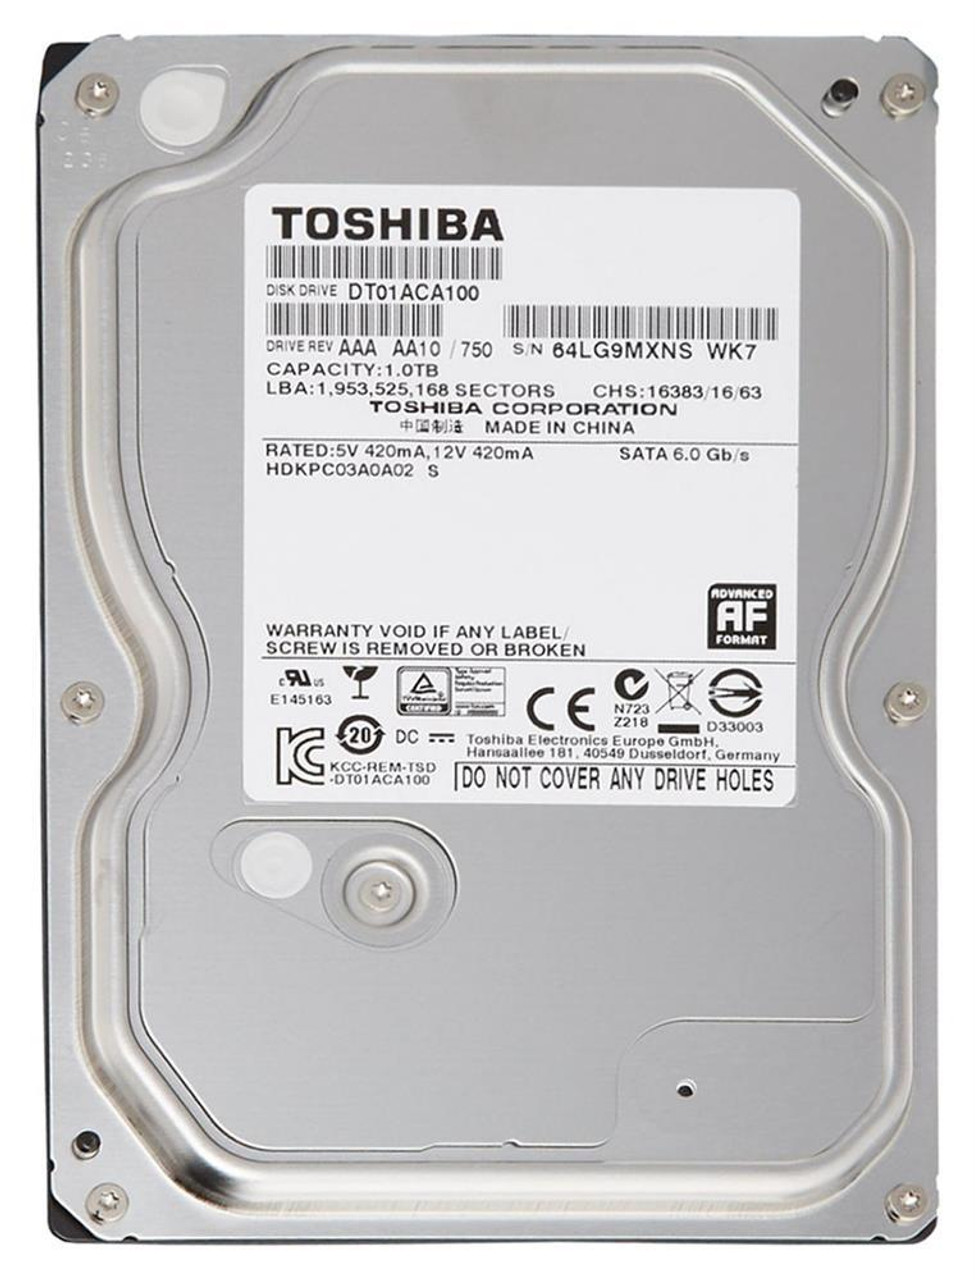 1TB Toshiba 3.5-inch SATA 6Gbps Hard Drive (7200rpm, 32MB cache)